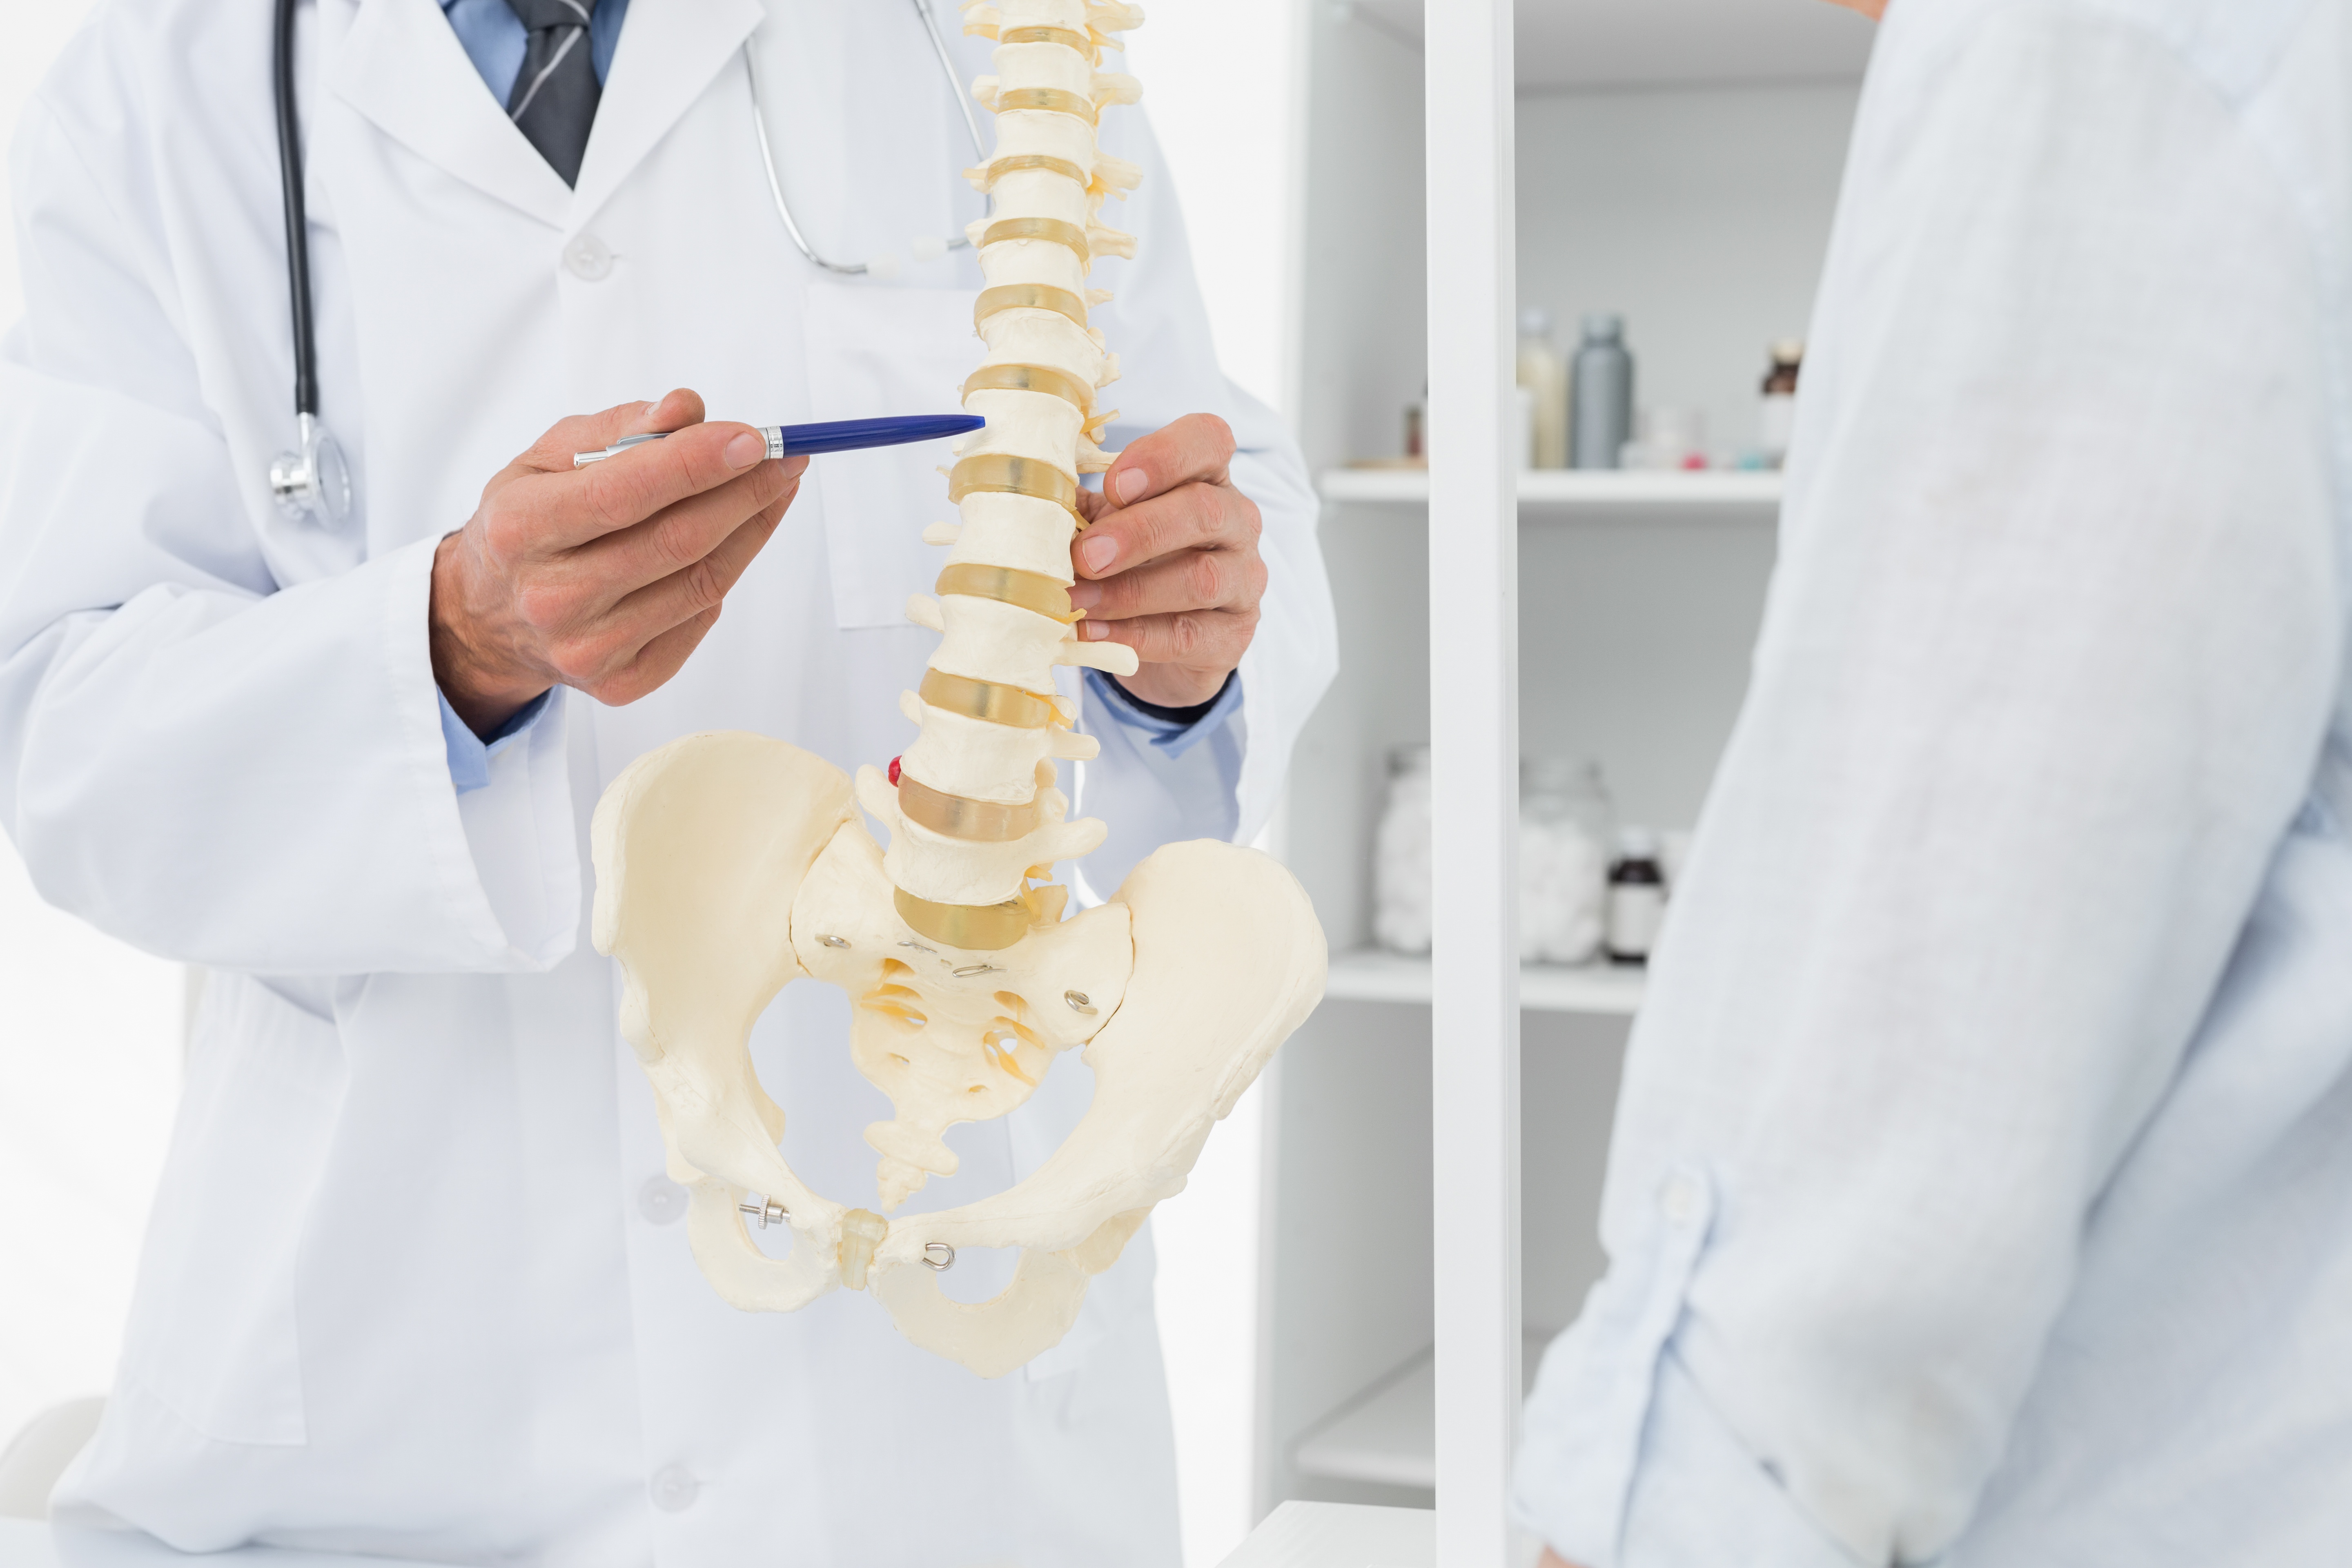 Chiropractor Explaining Spine